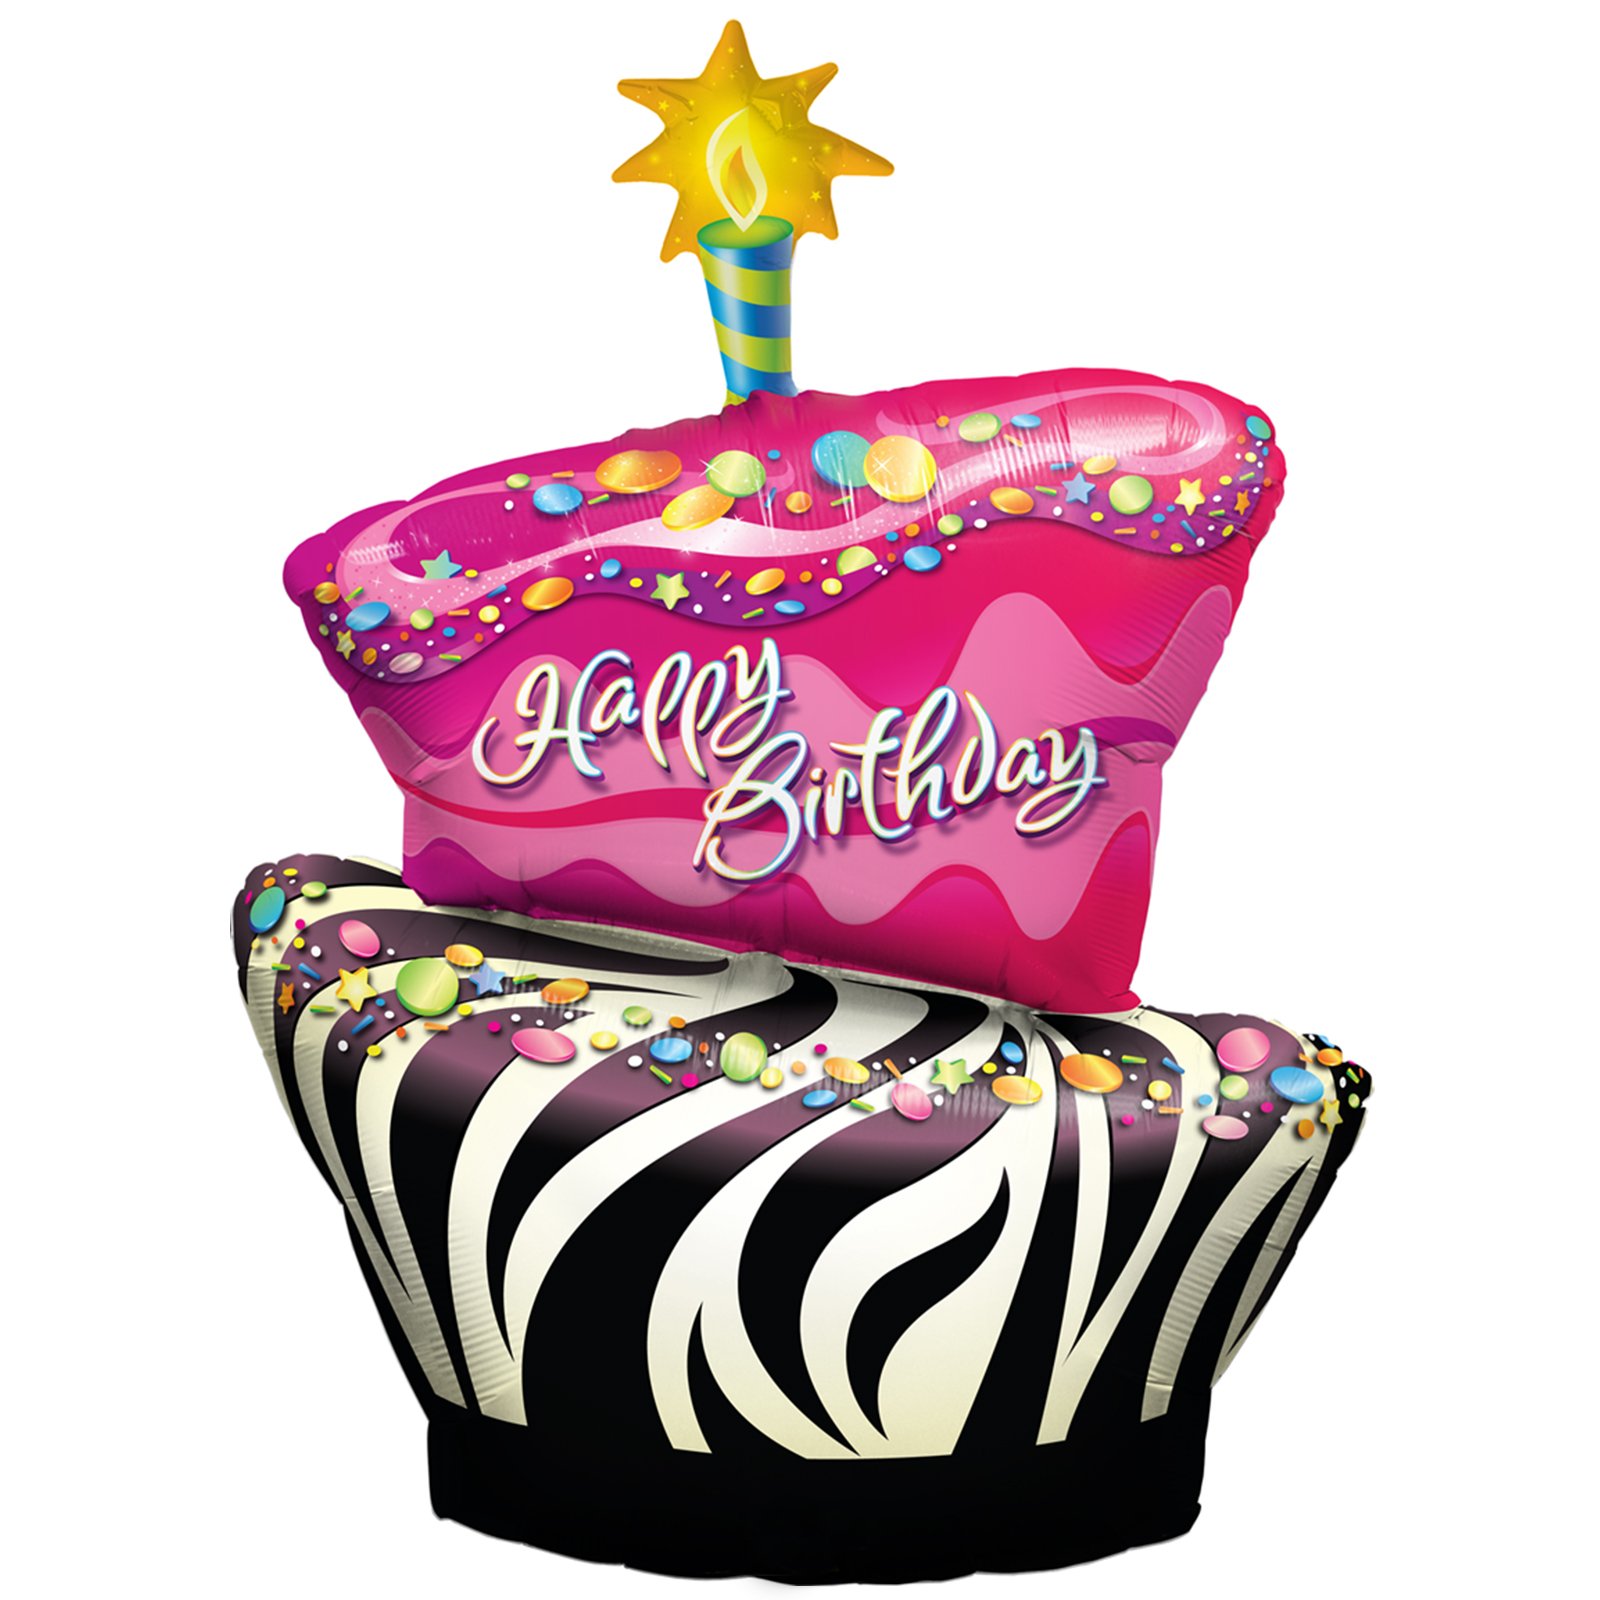 Happy birthday cake clipart